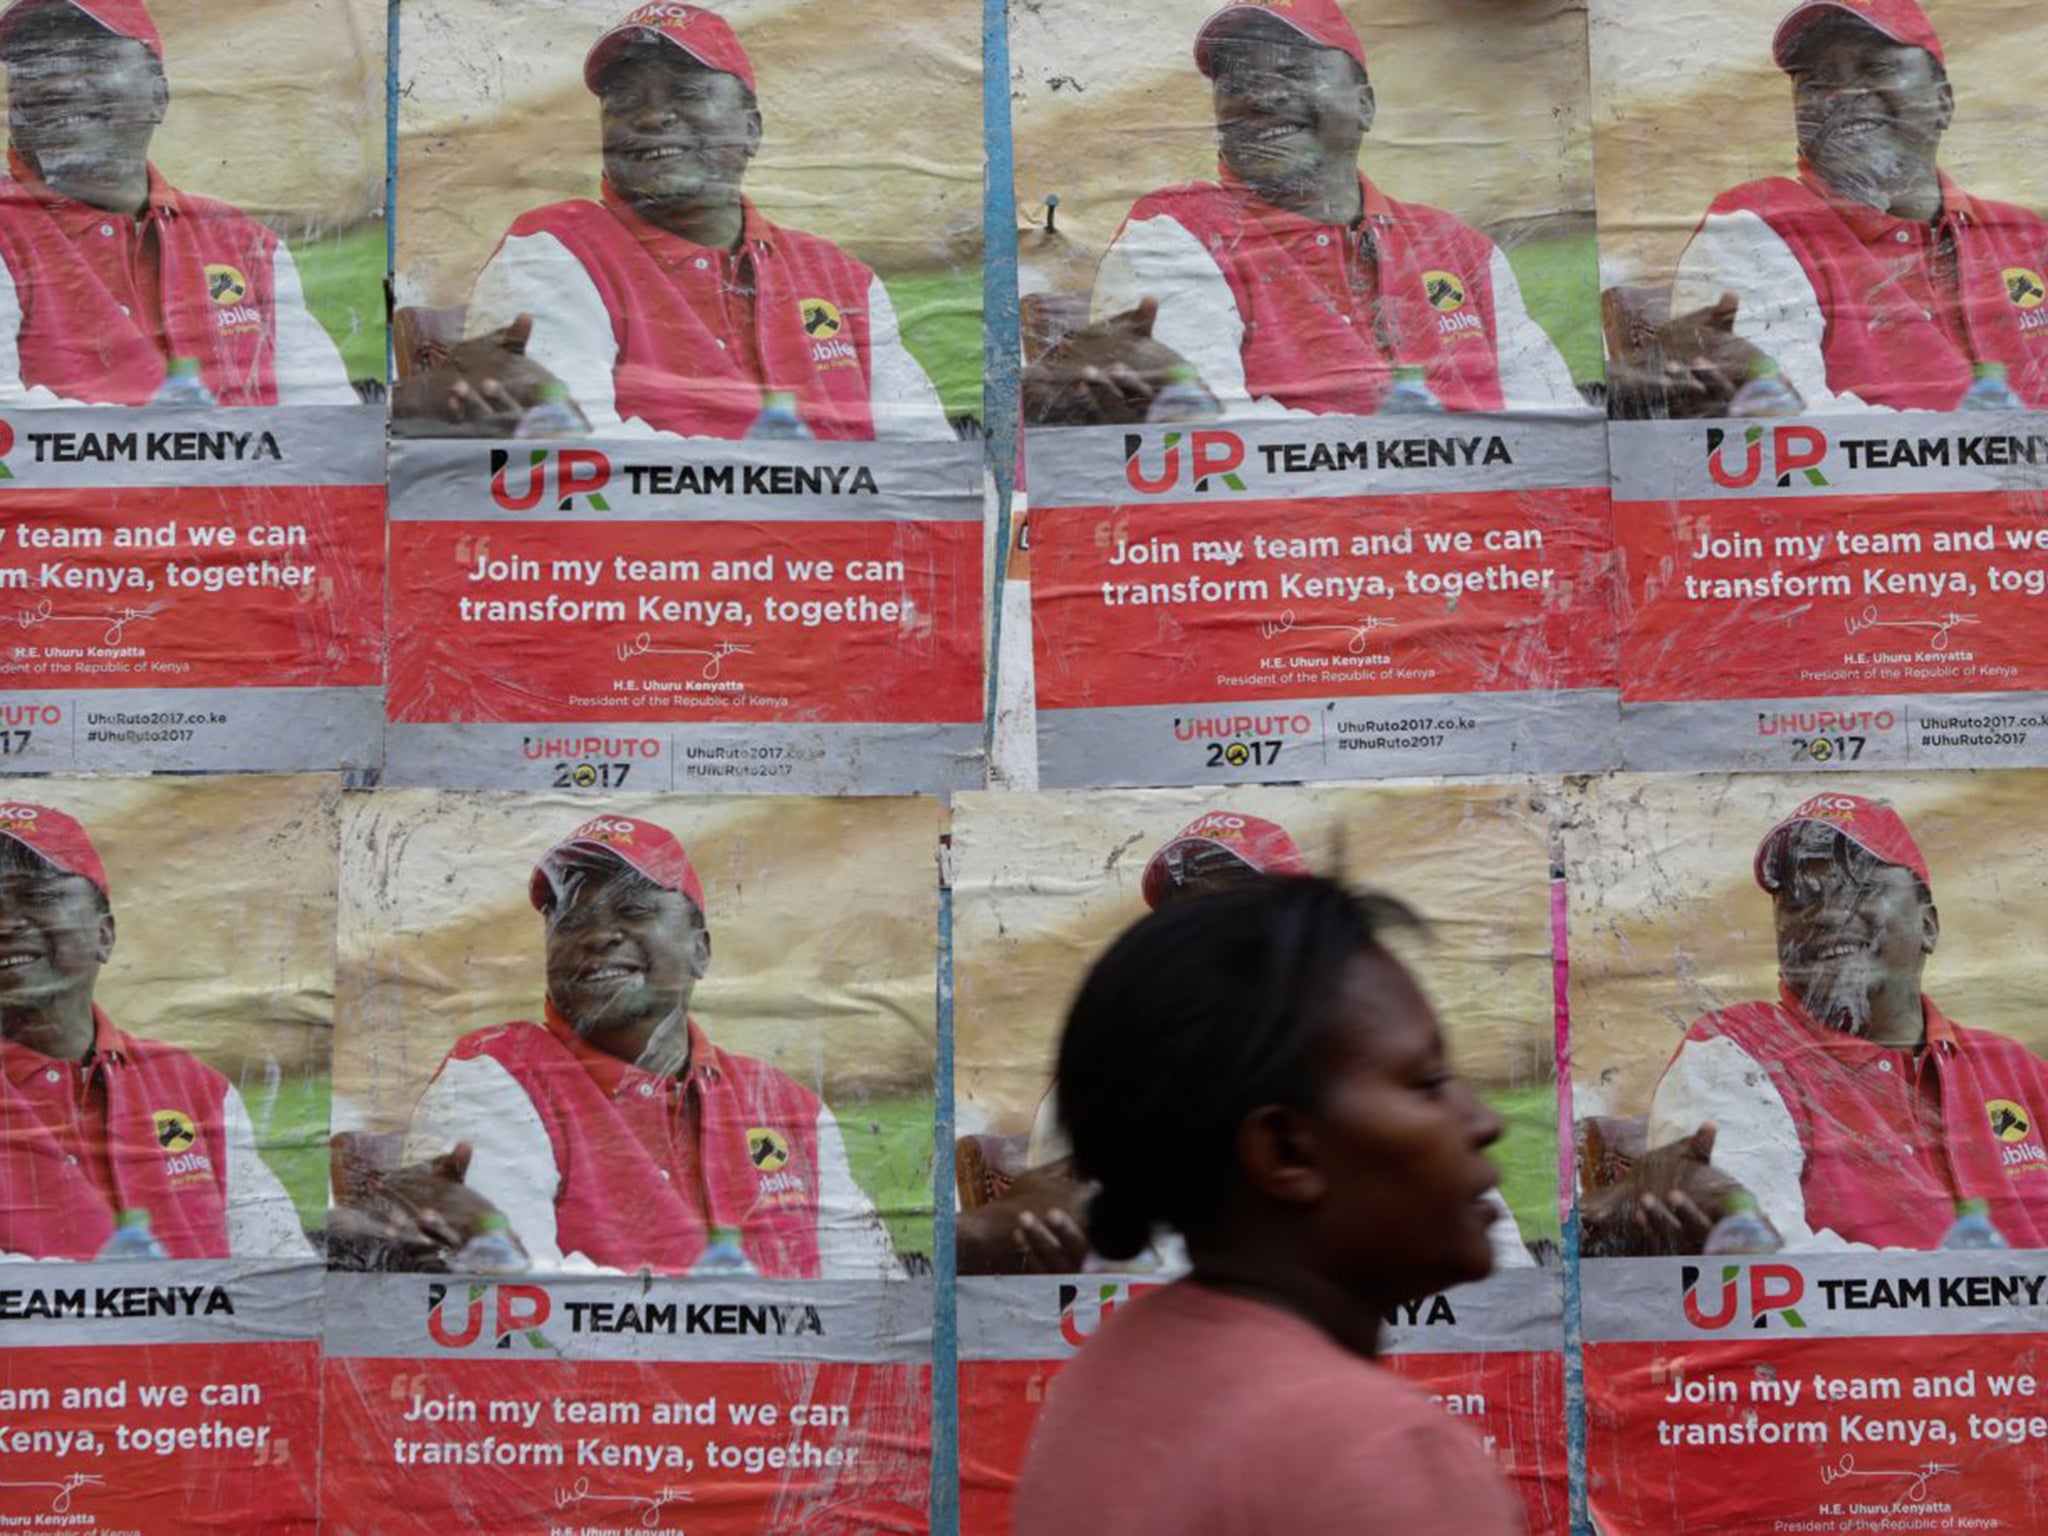 Nairobi: Campaign posters of Kenyan President Uhuru Kenyatta line the streets of the capital